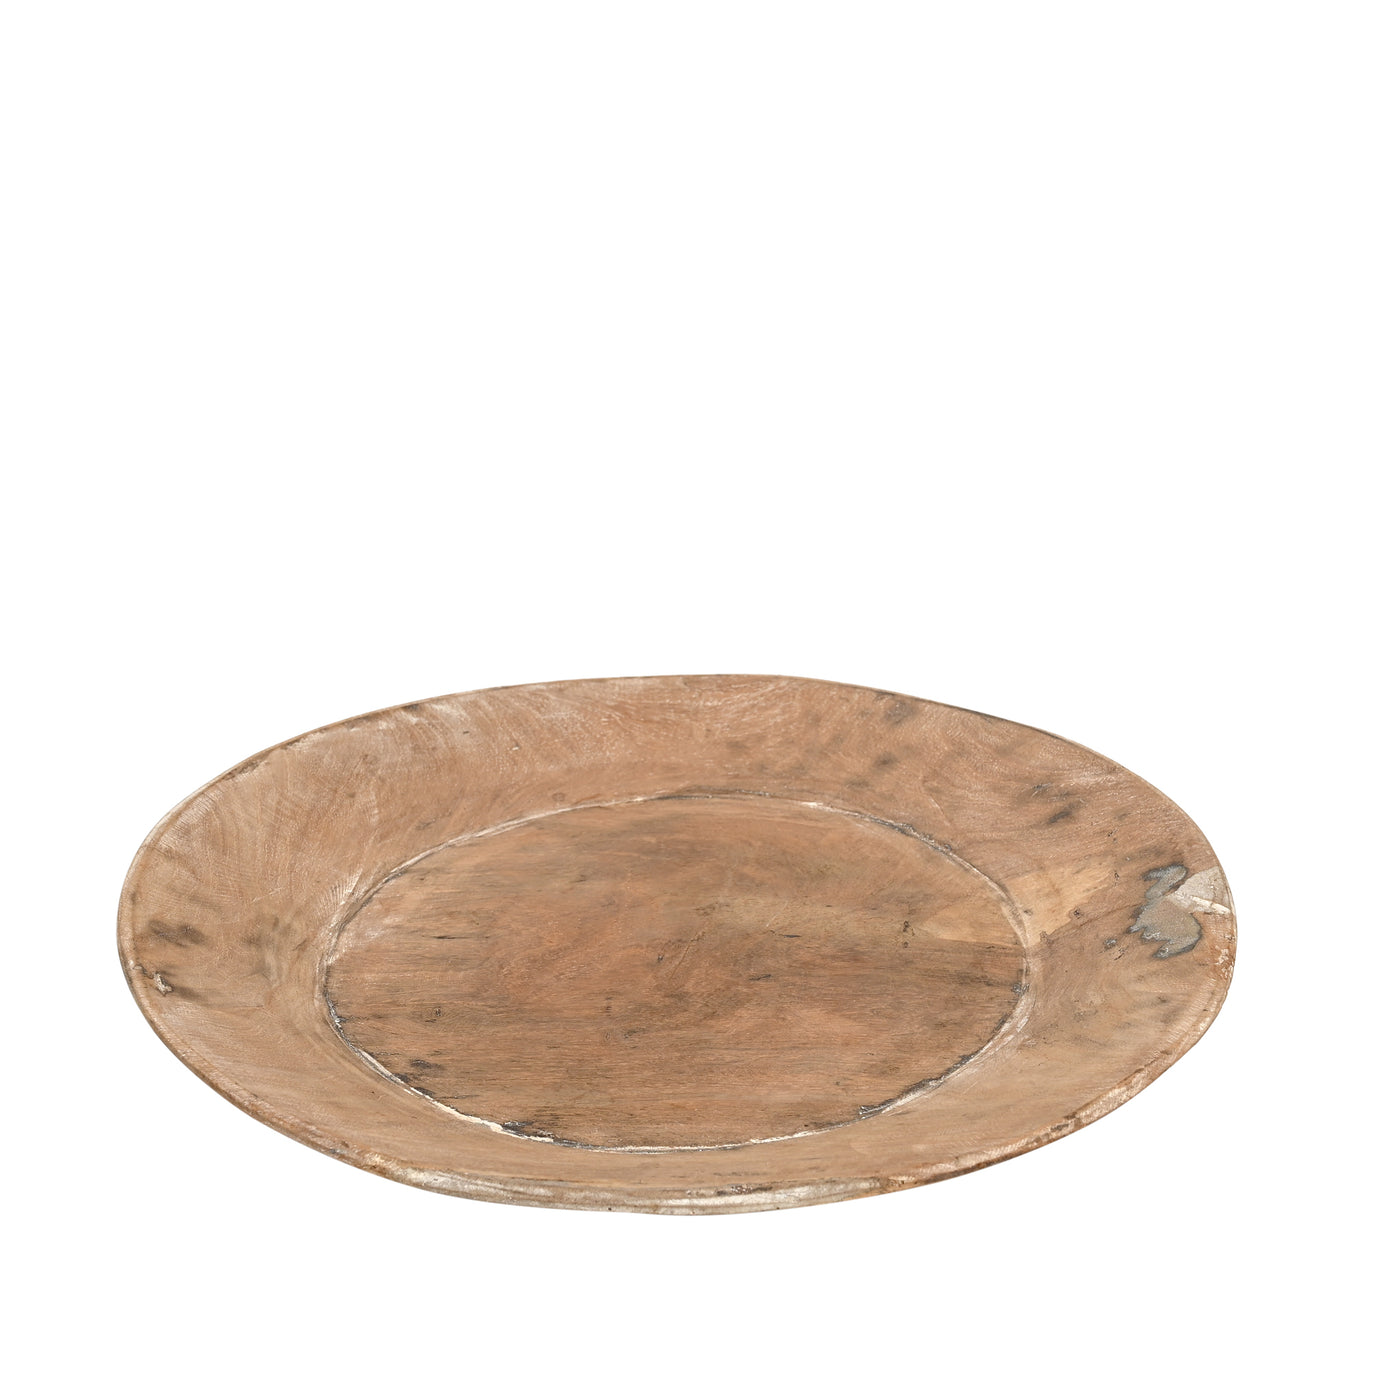 Katora - Wooden plate n ° 39